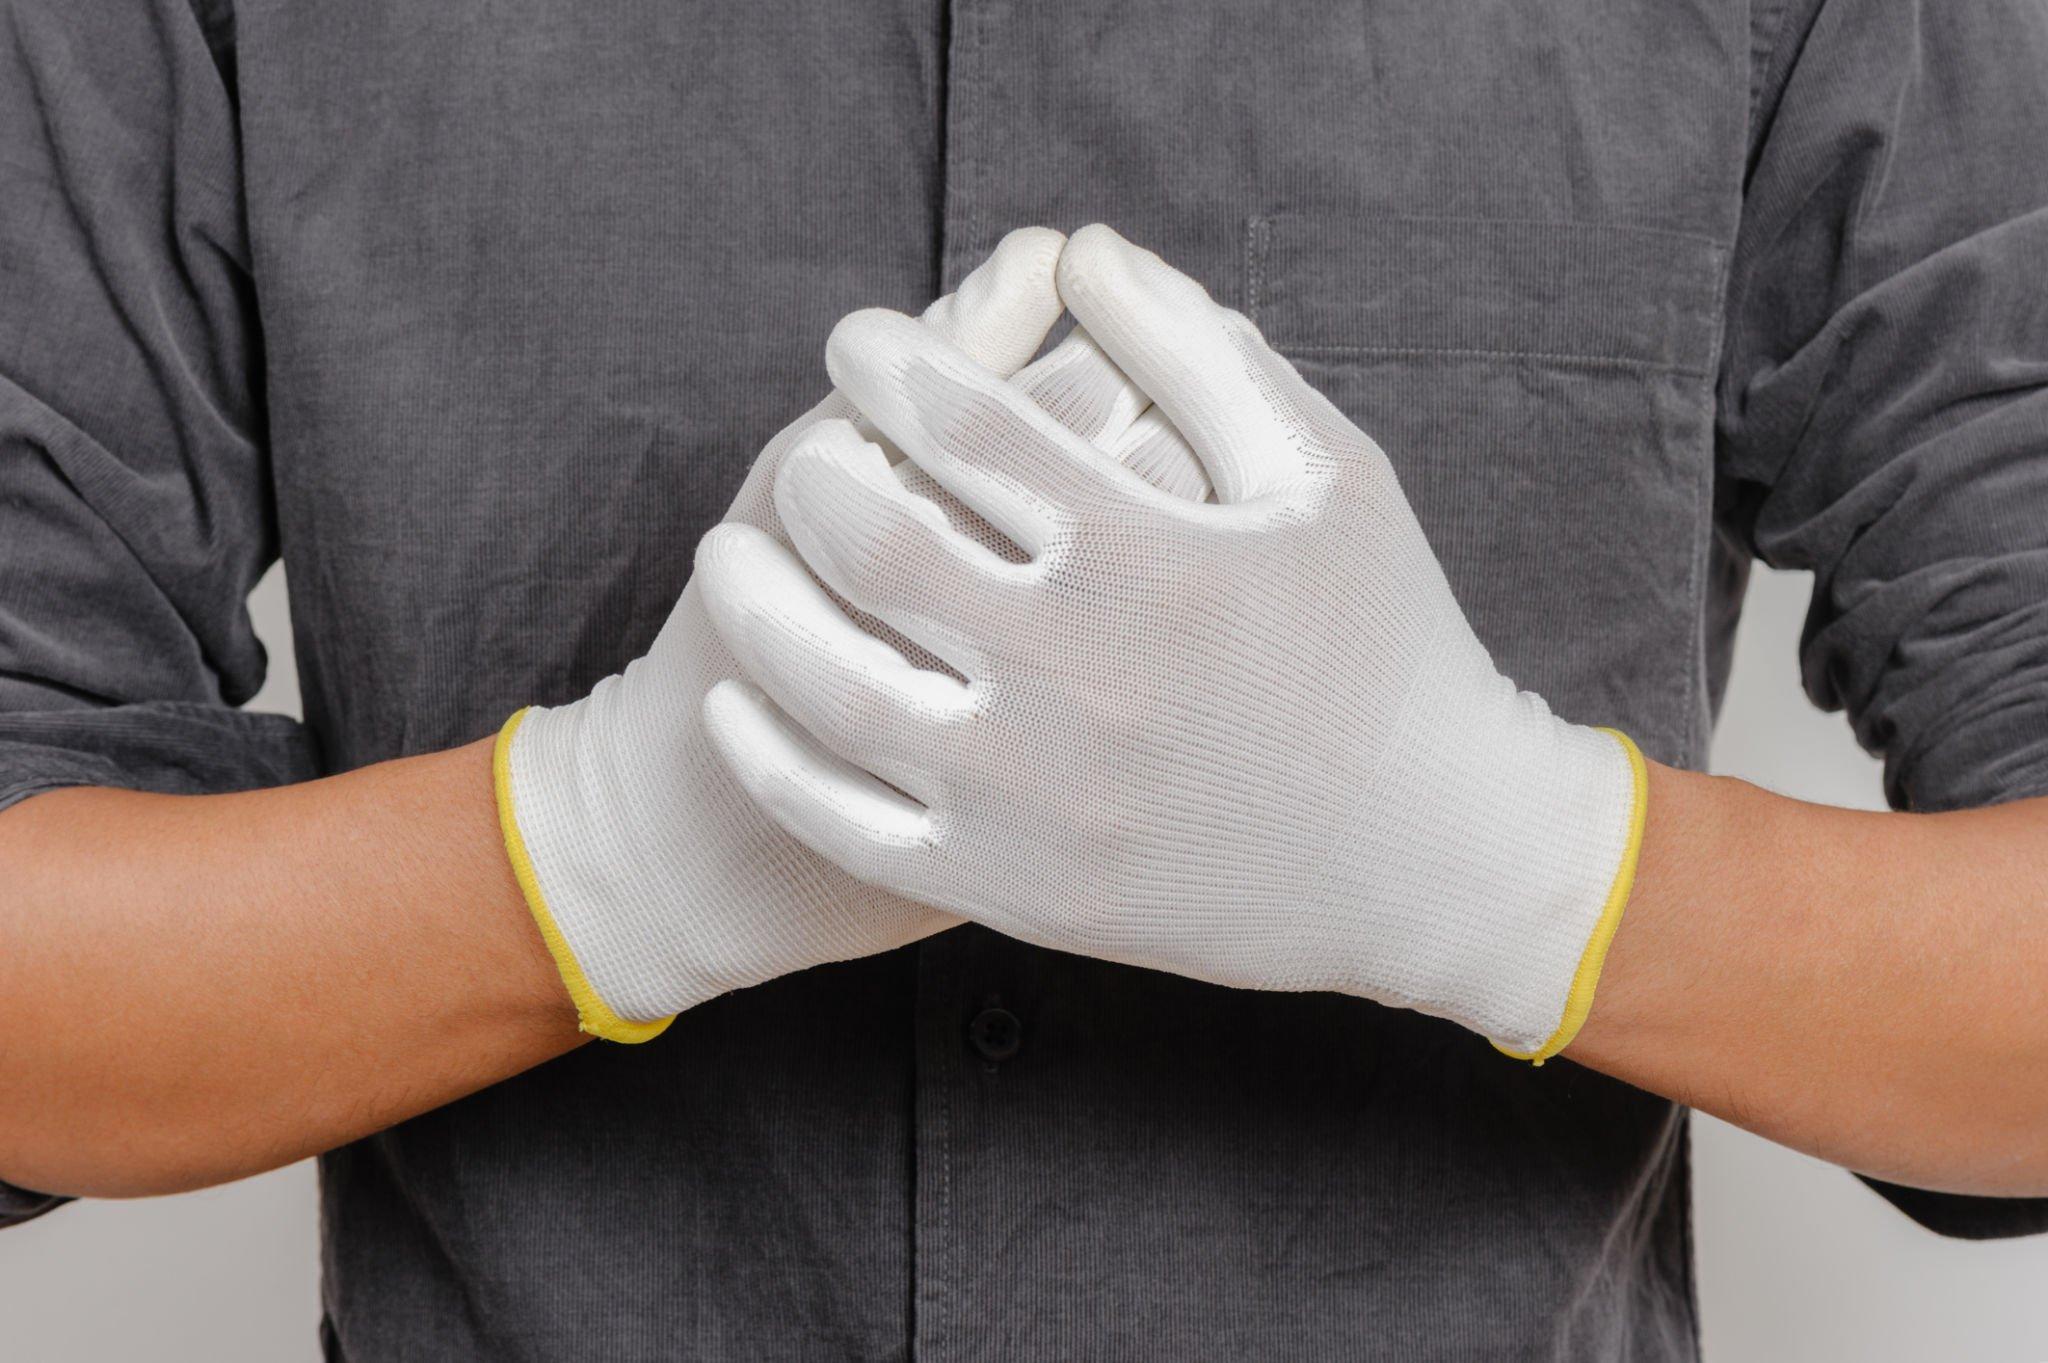 Fungsi sarung tangan pelindung anti-statis